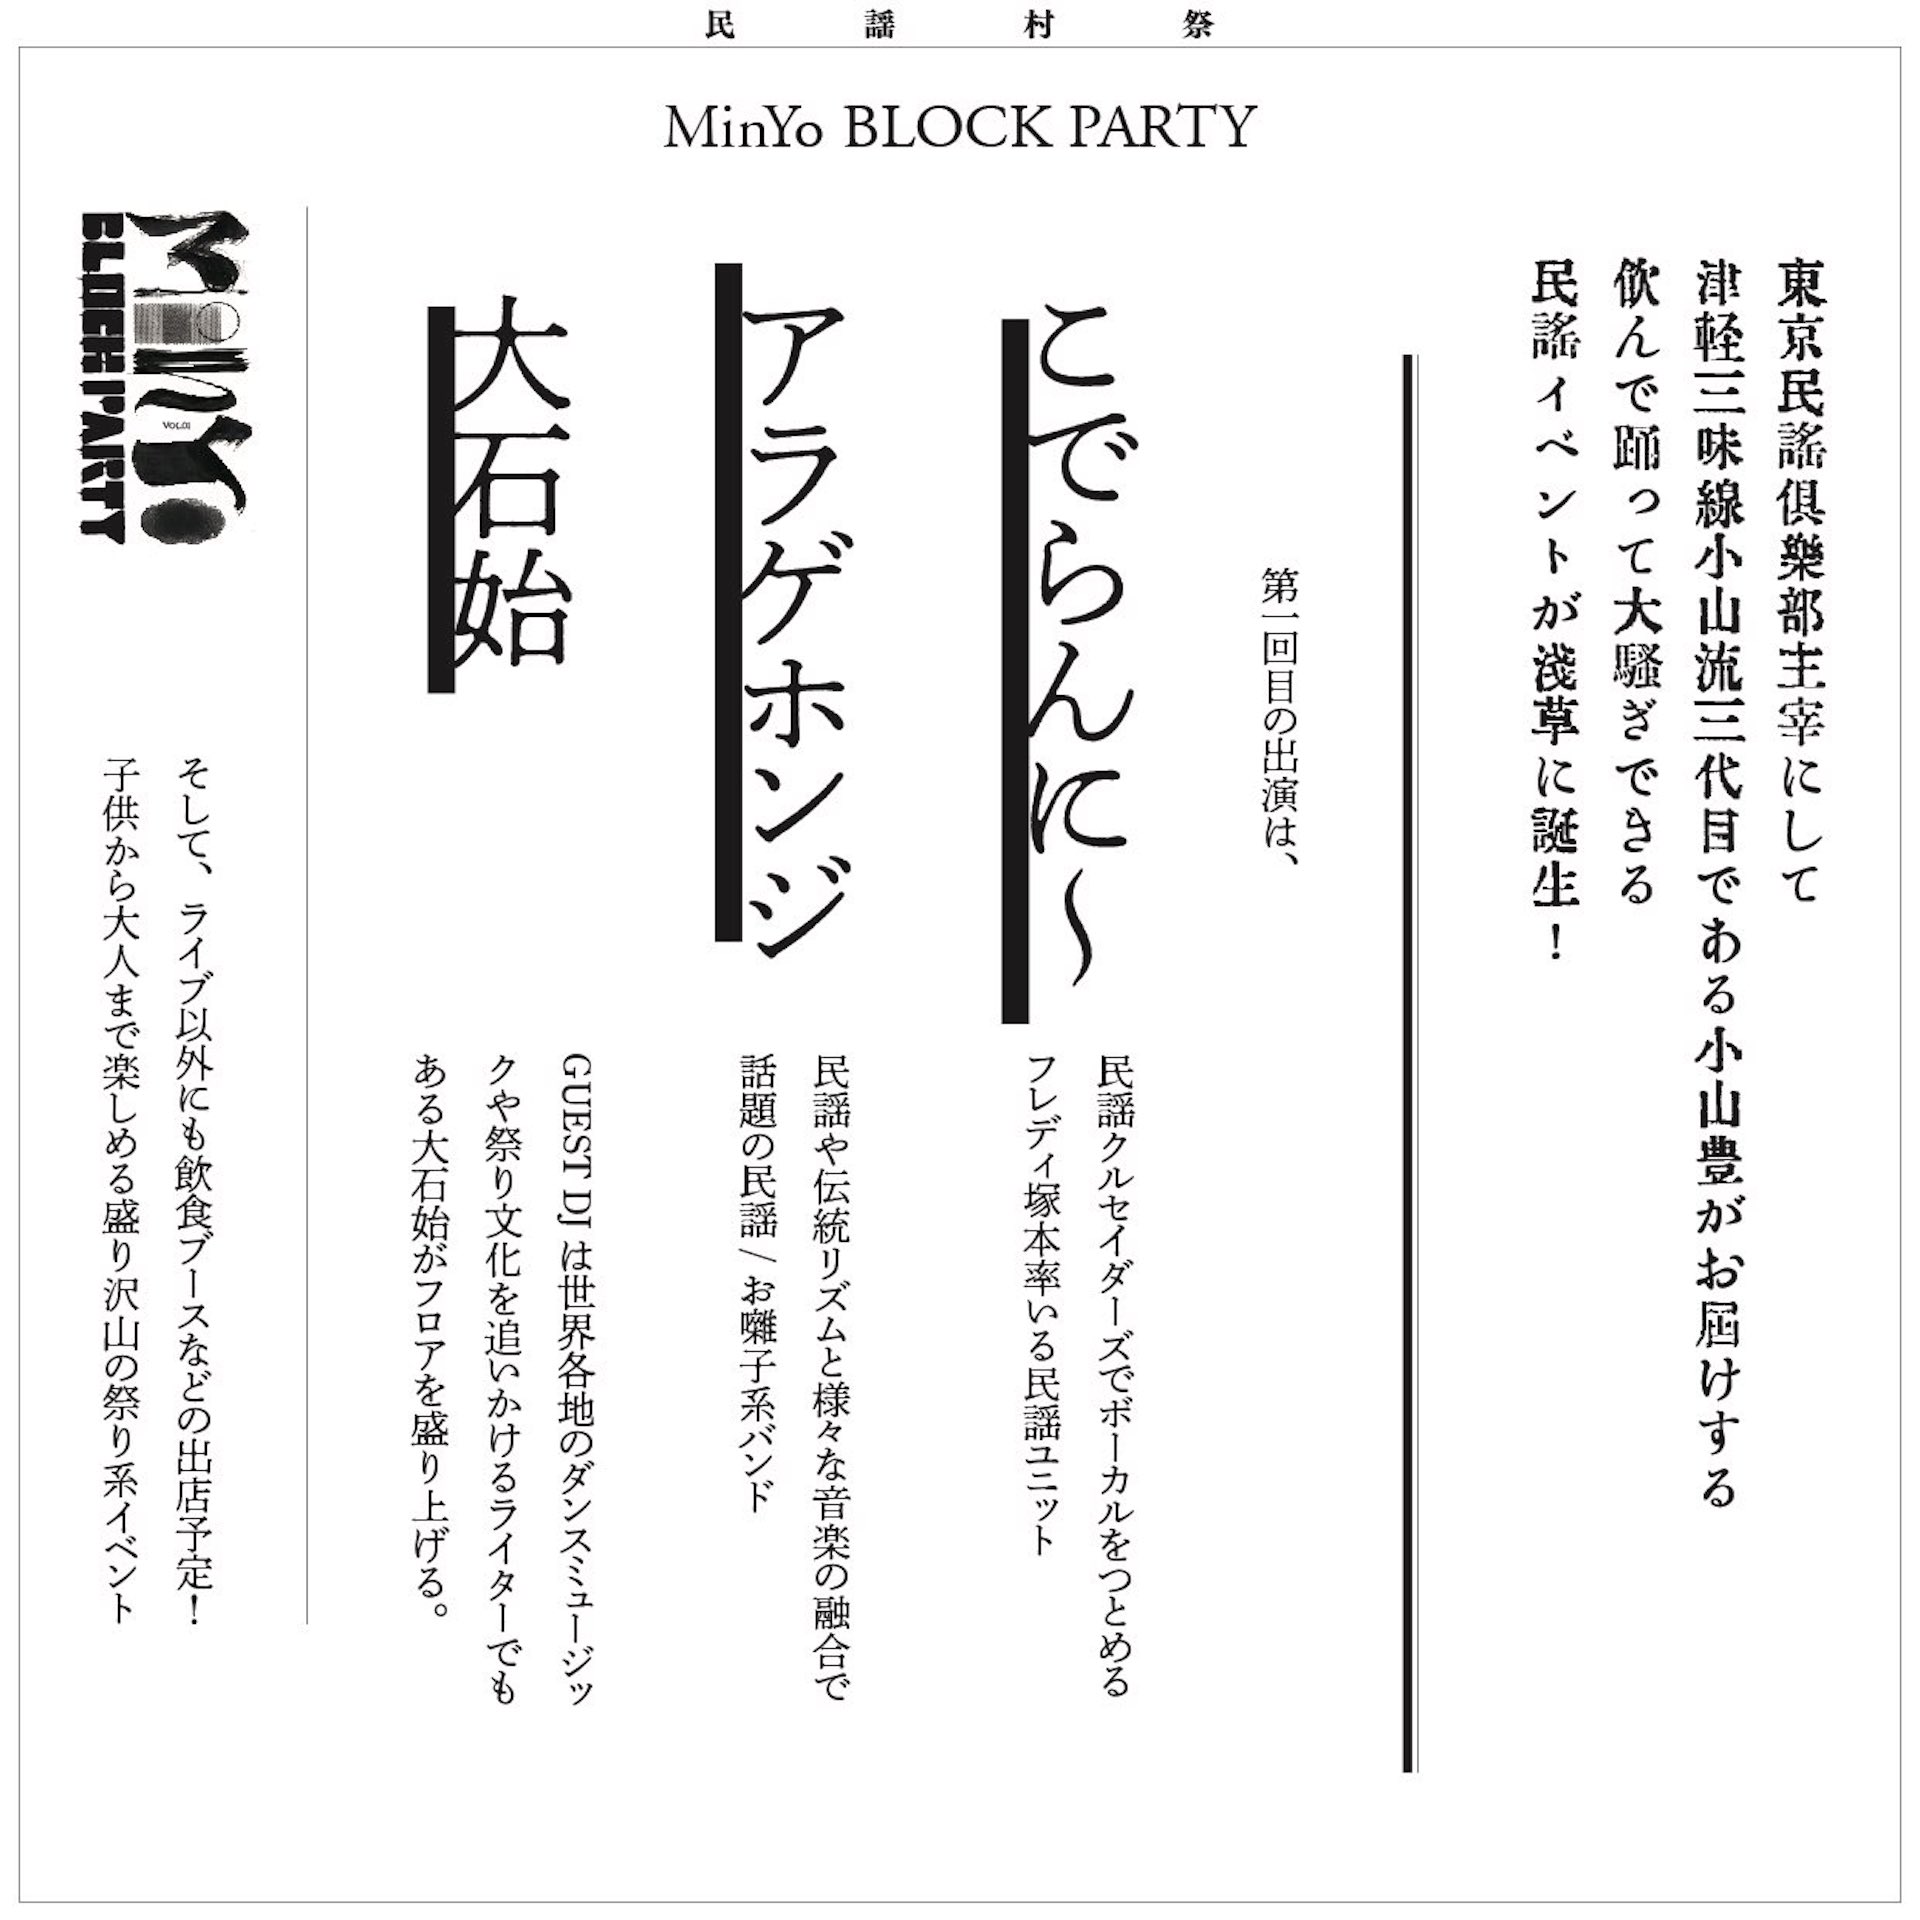 MinYo Block Party